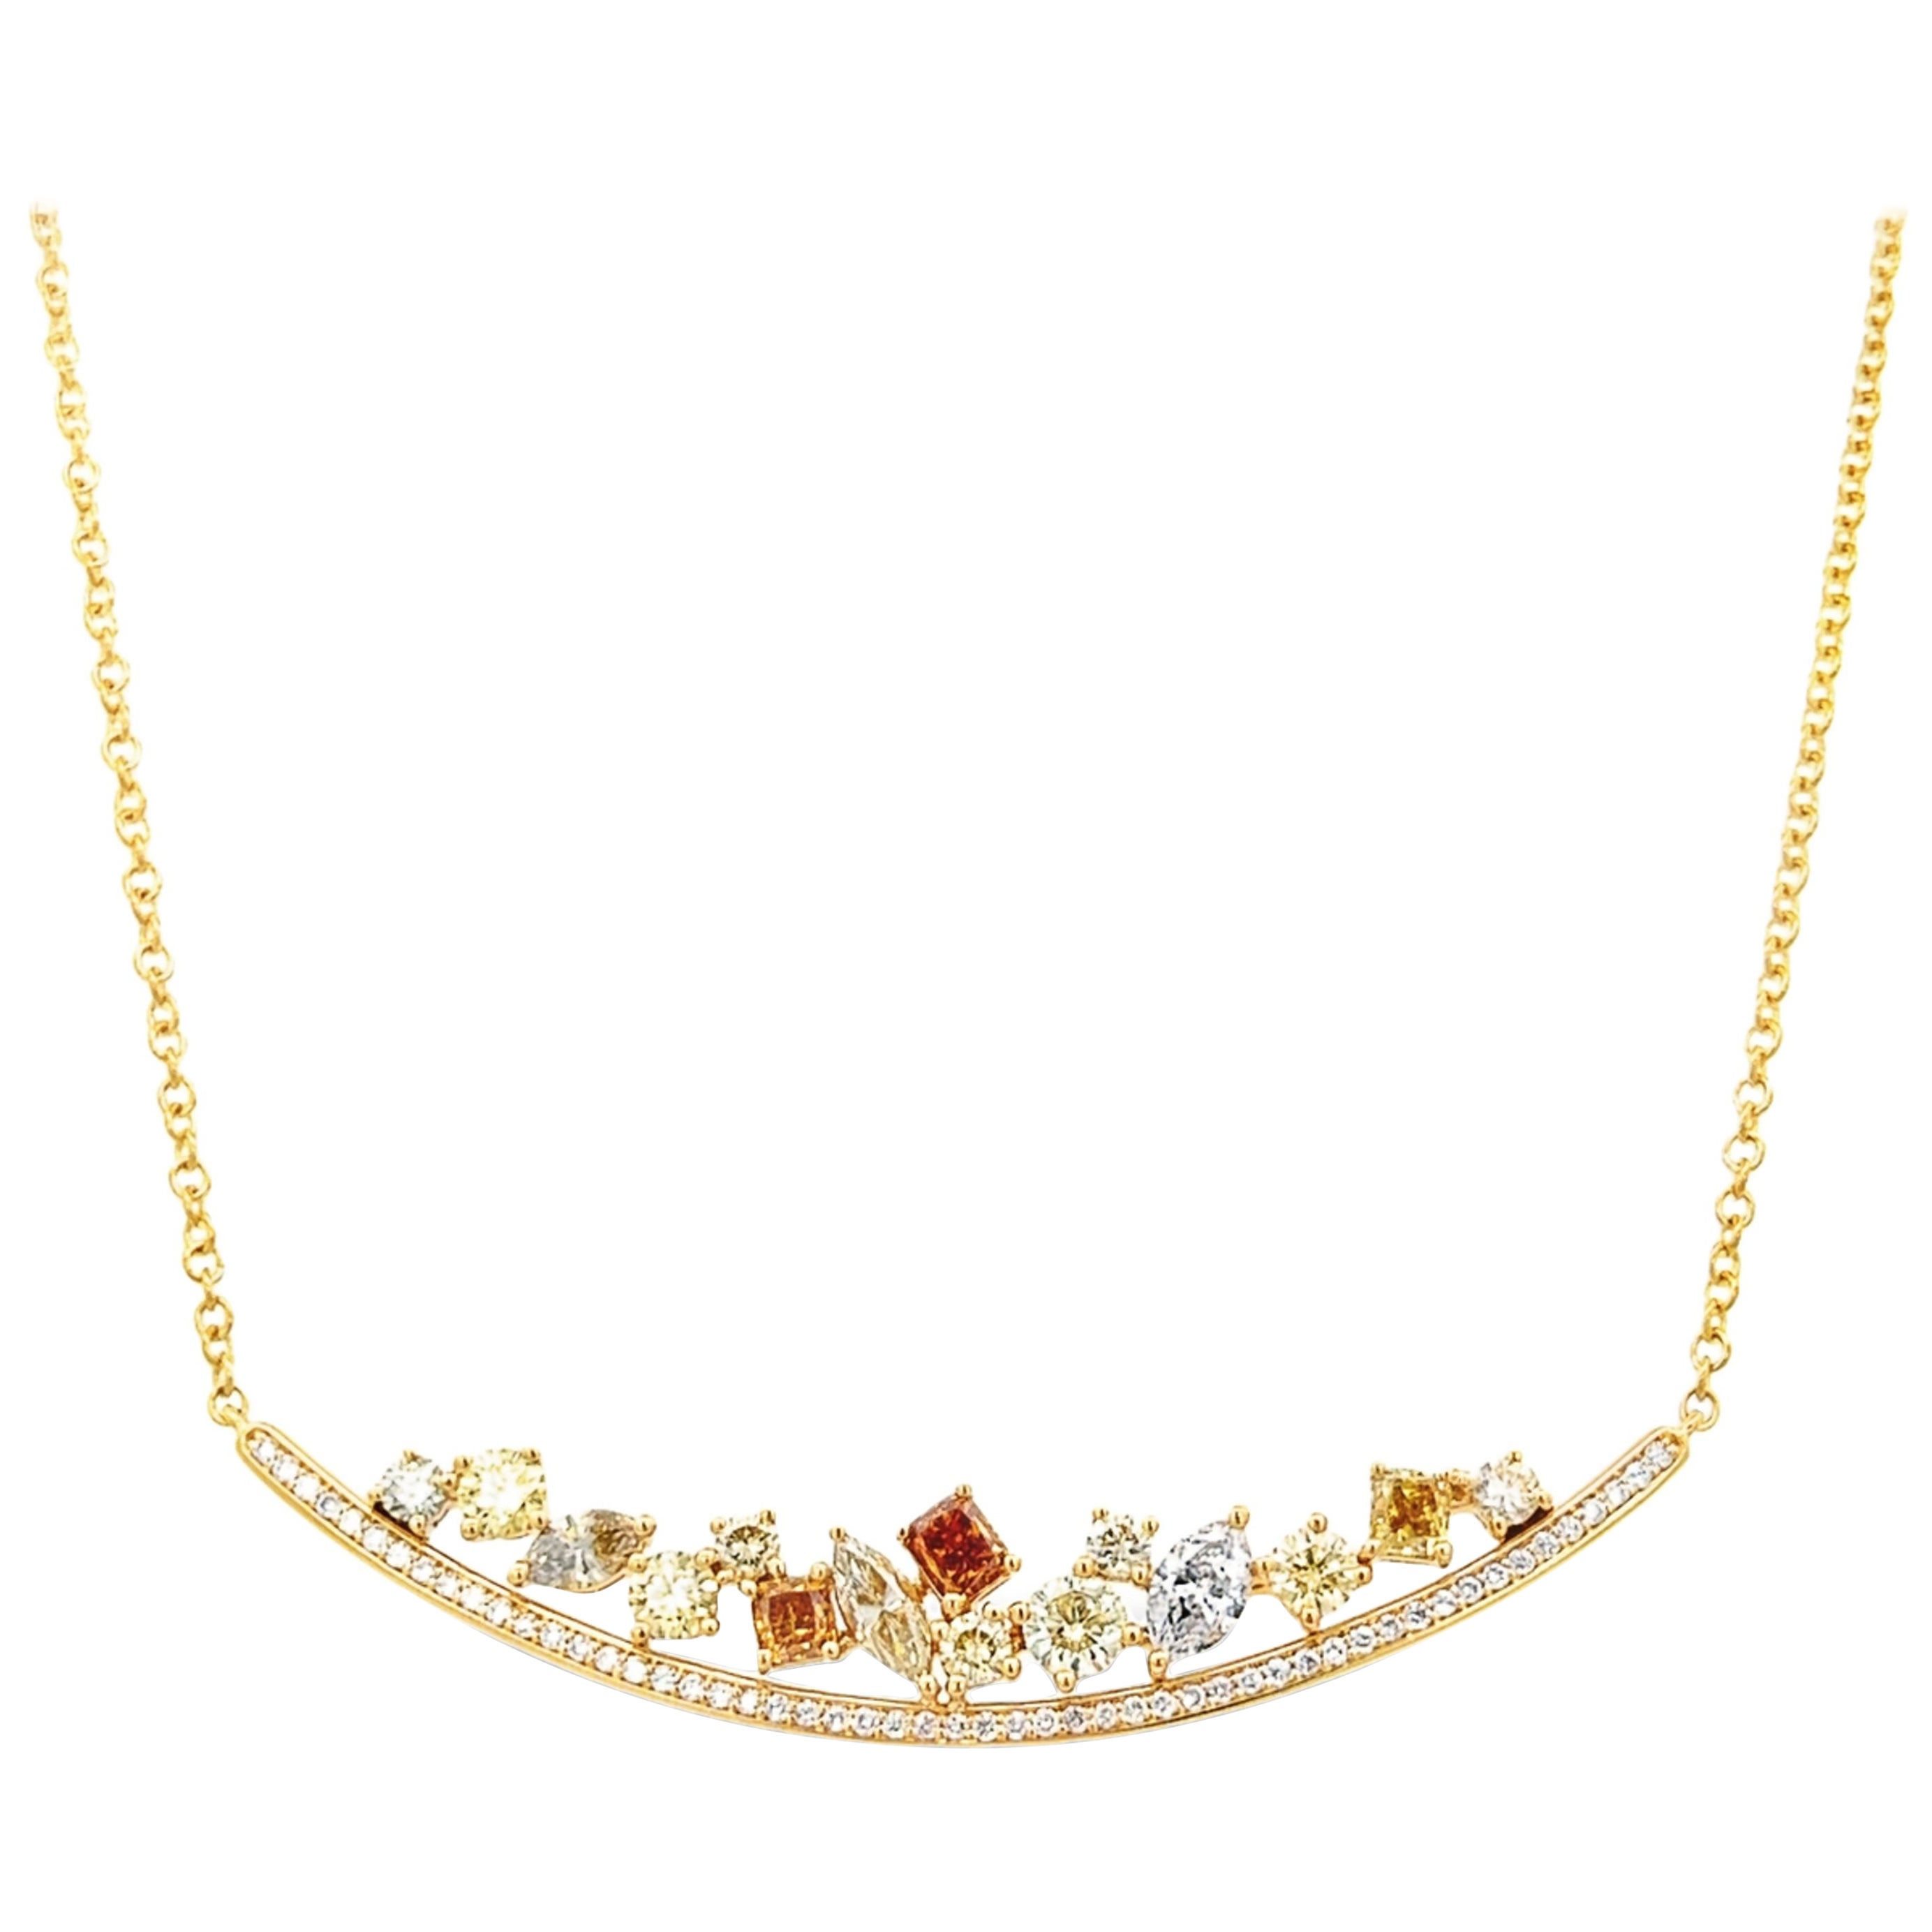 Alexander Beverly Hills 3.04ct Multi Color Diamond Pendant Necklace 18k